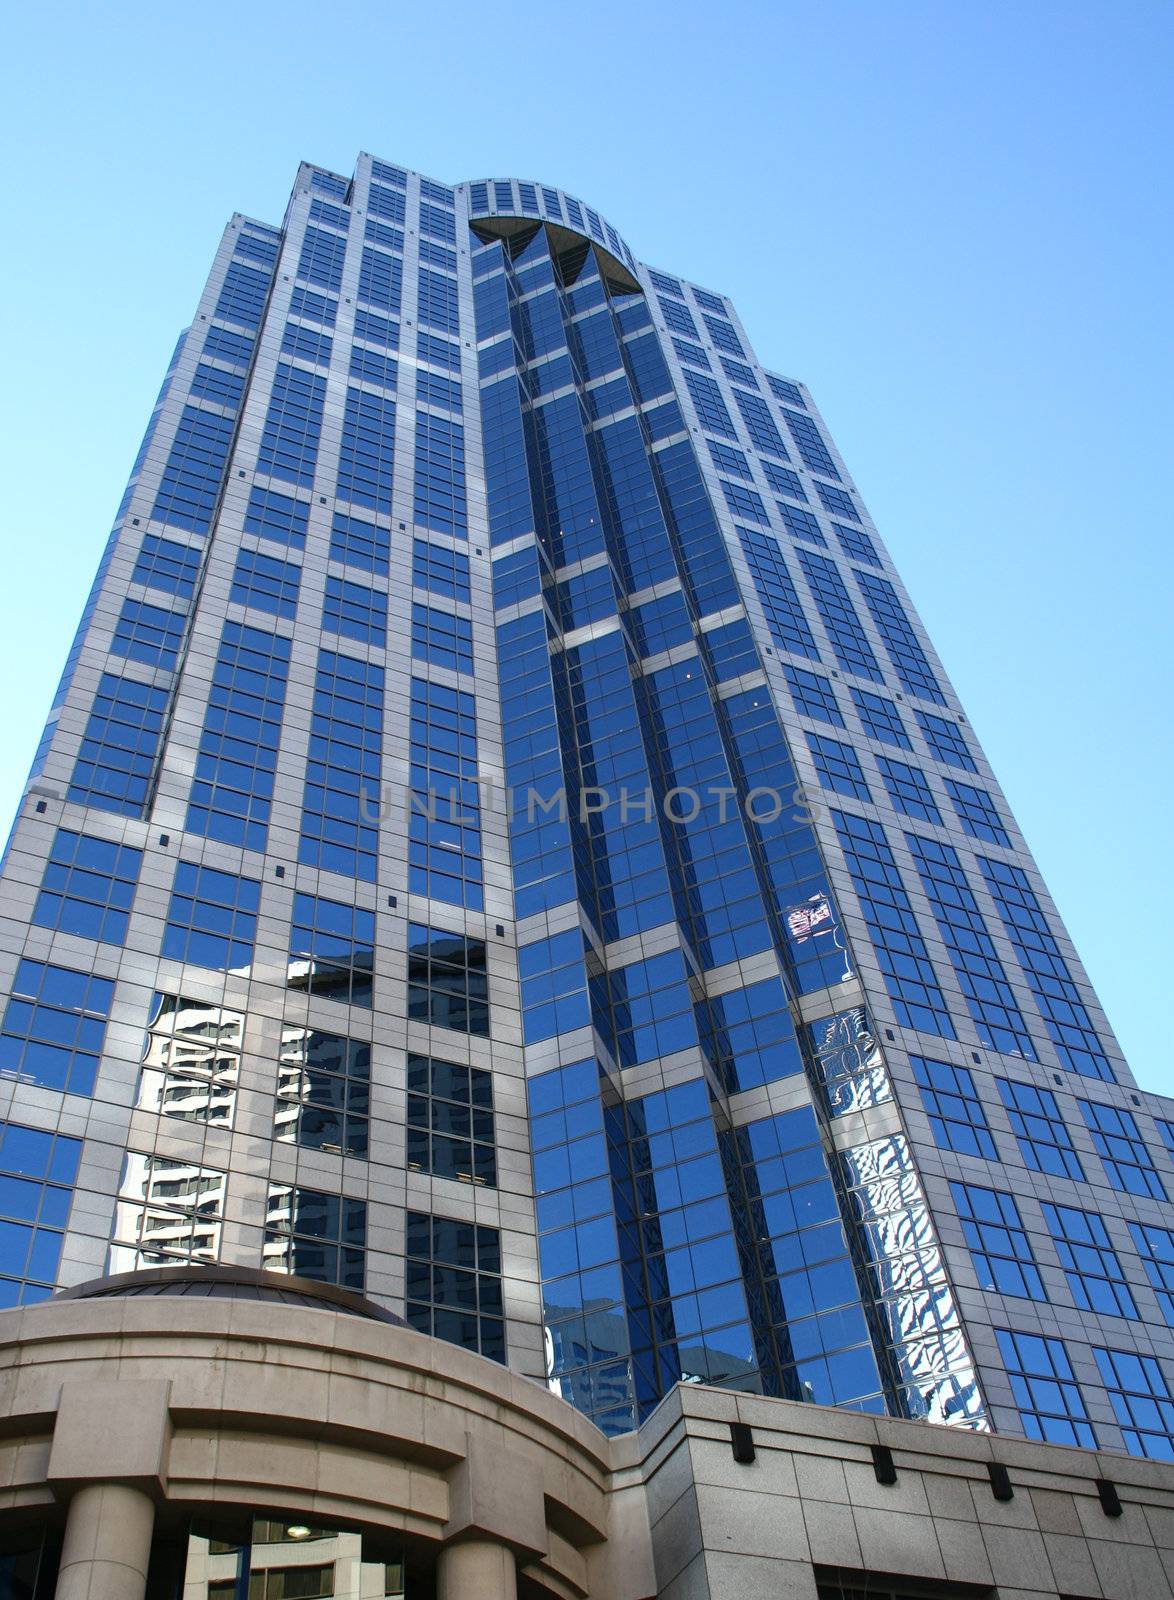 Skyscraper in downtown Seattle, Washington, United States